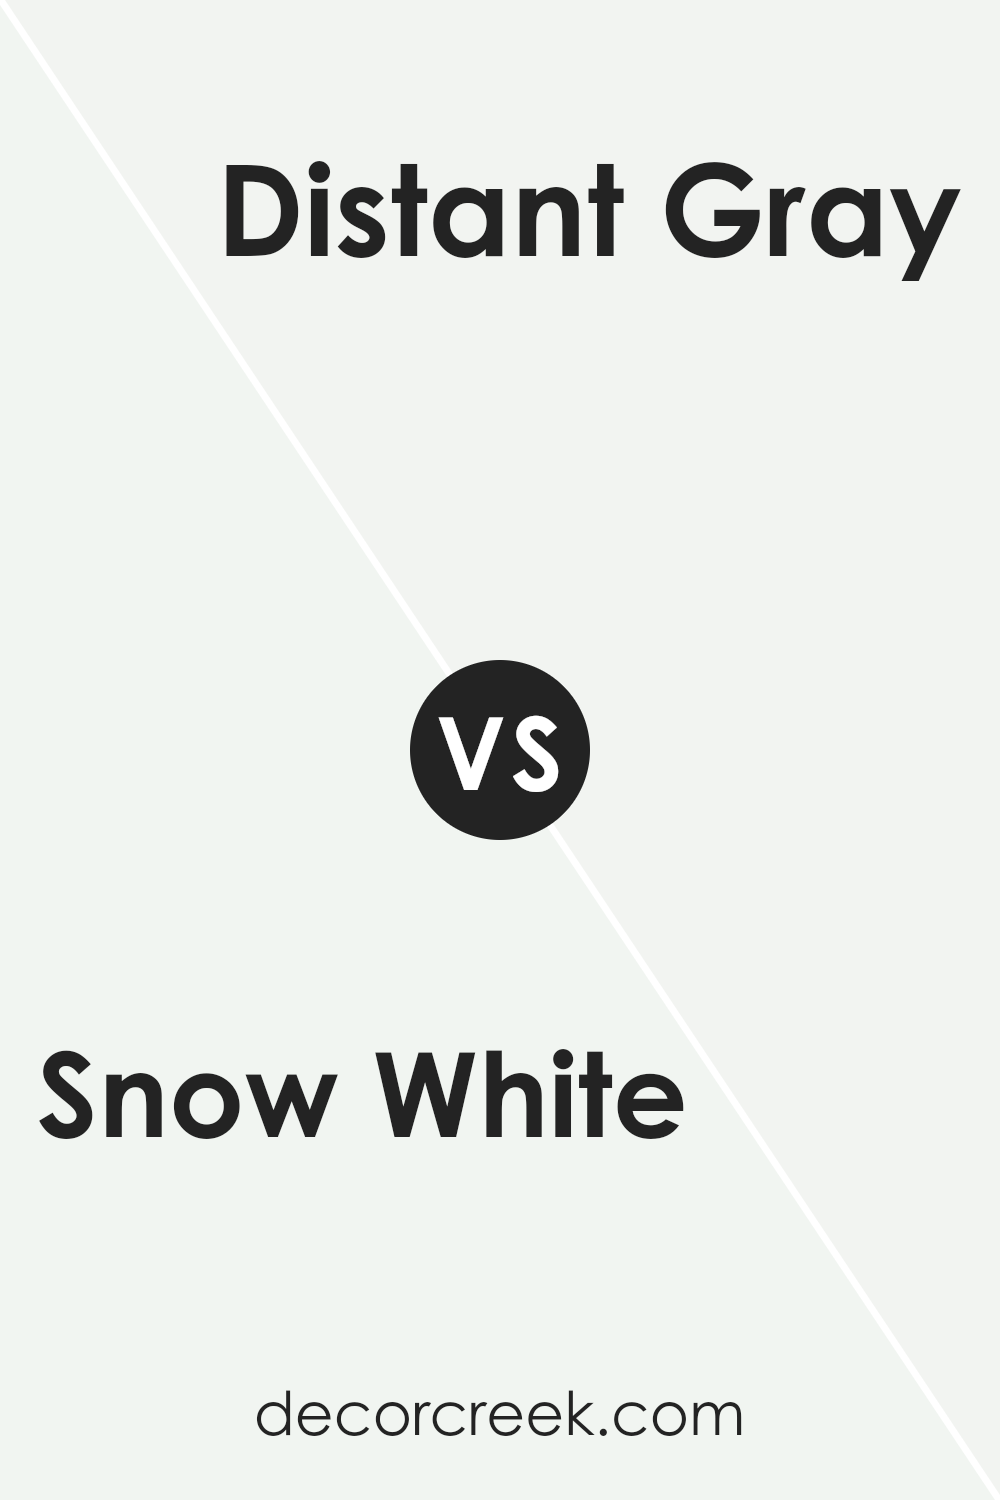 snow_white_oc_66_vs_distant_gray_oc_68